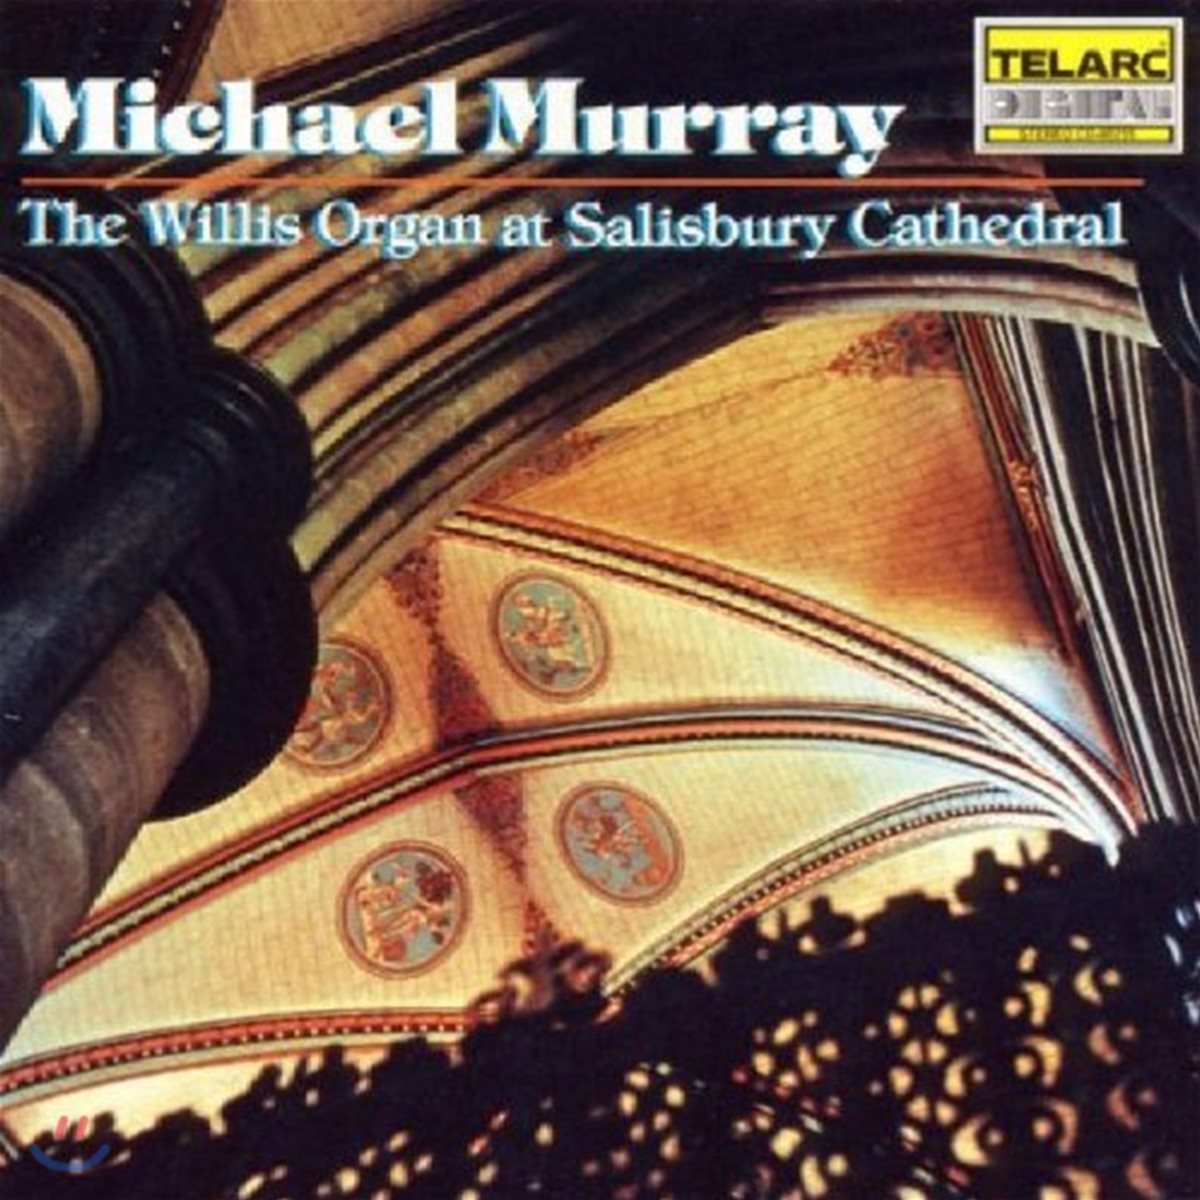 Michael Murray 마이클 머레이 - 솔즈베리 대성당의 윌리스 오르간 연주반 (The Willis Organ at Salisbury Cathedral)